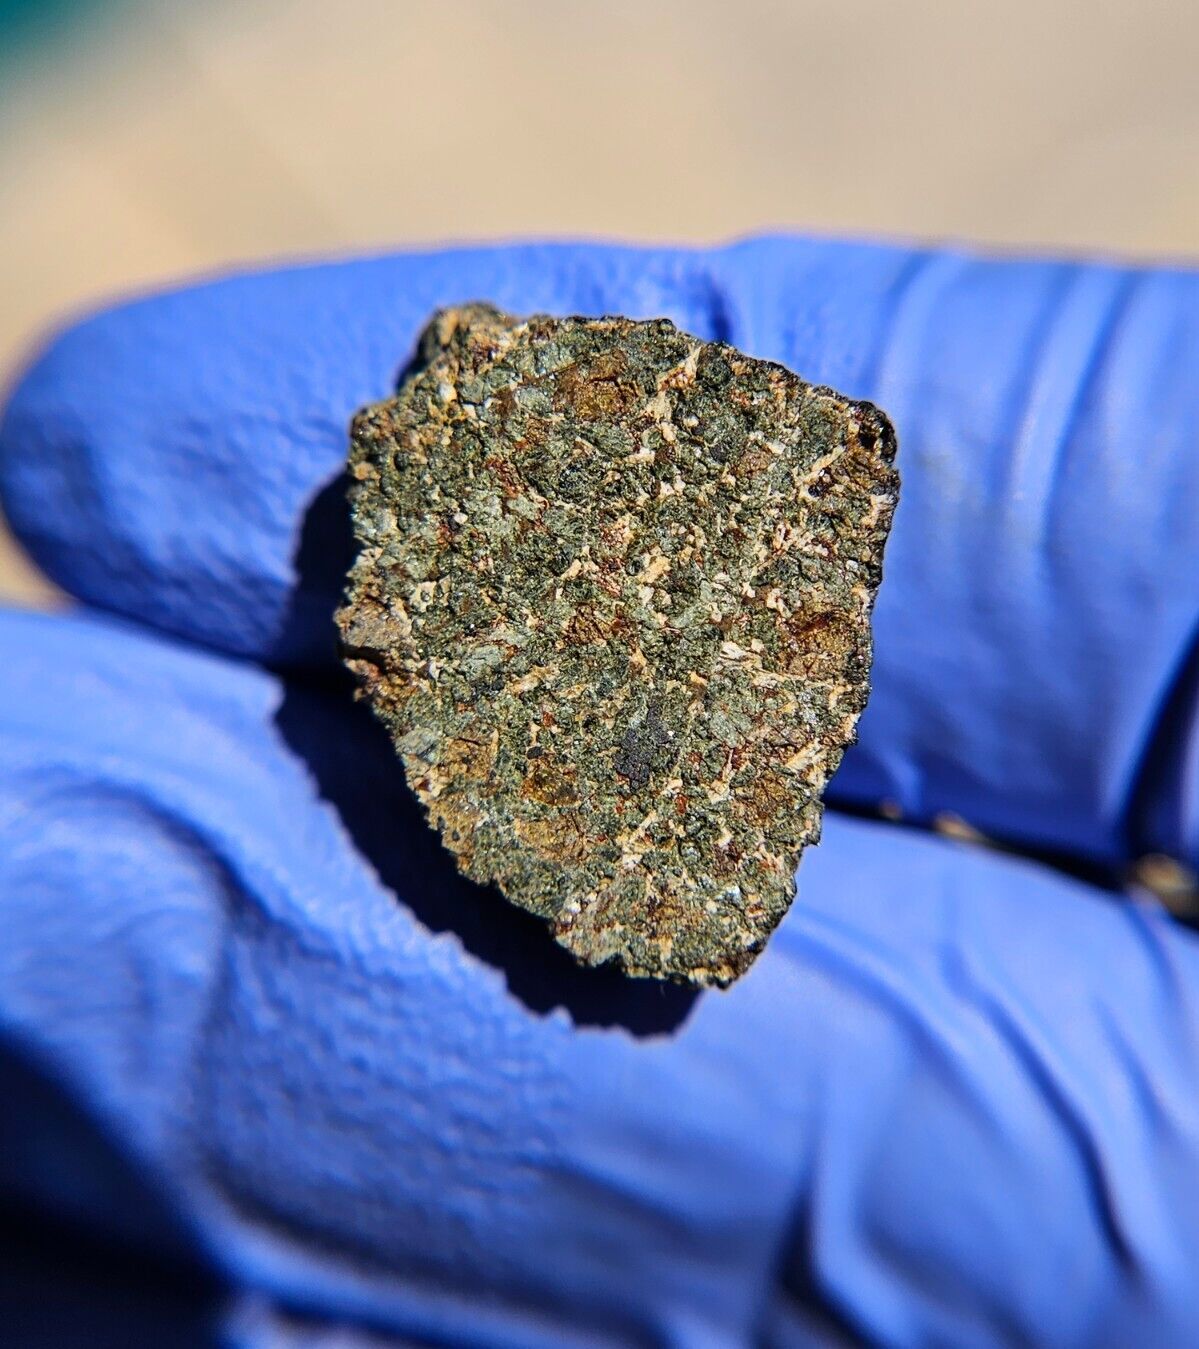 Meteorite**Hassi Messauod 001, Nakhlite Martian**3.669 grams, W/Fusion Crust